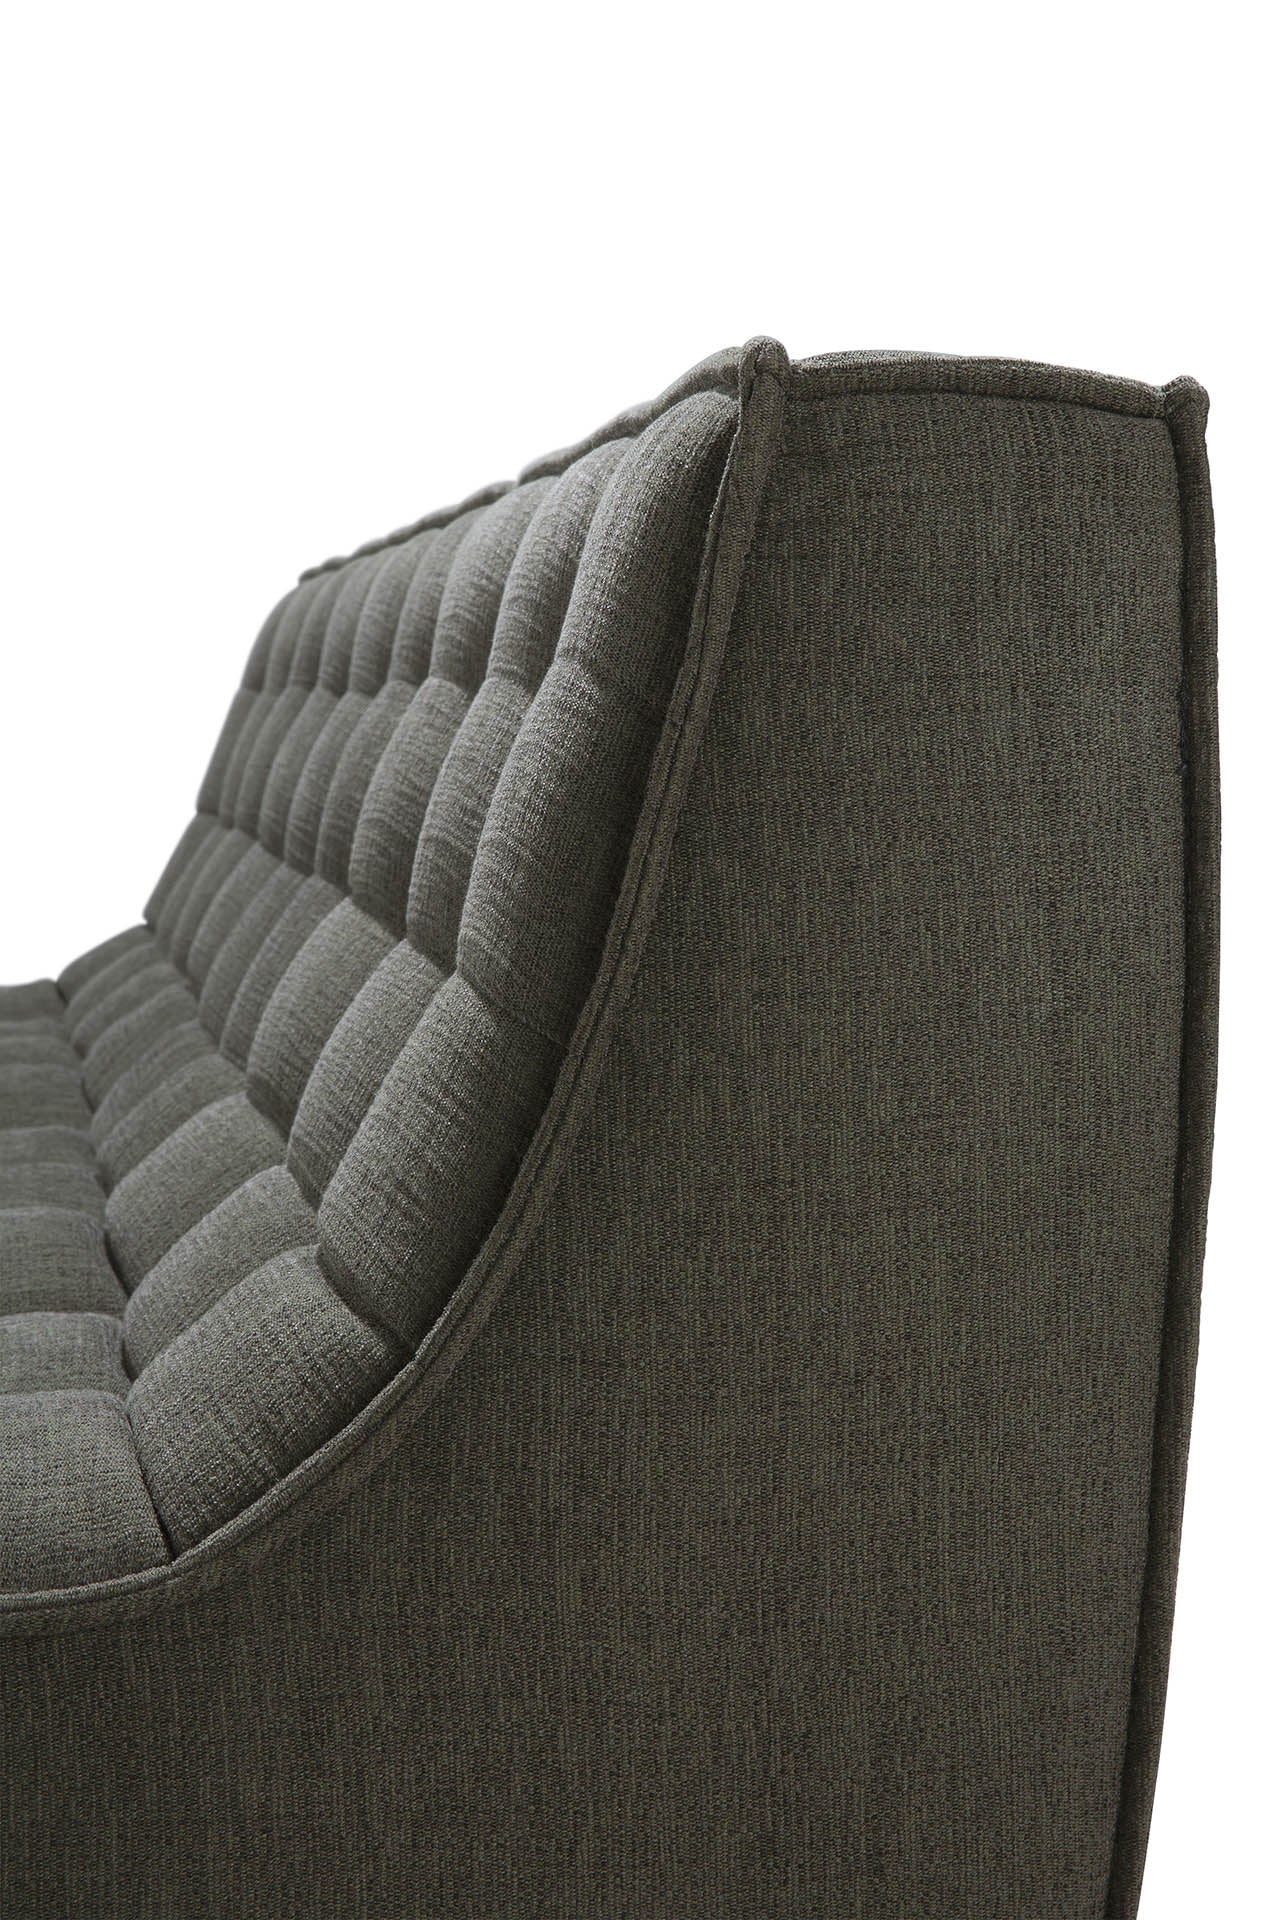 N701 3 Seater Eco Fabric Sofa, Moss